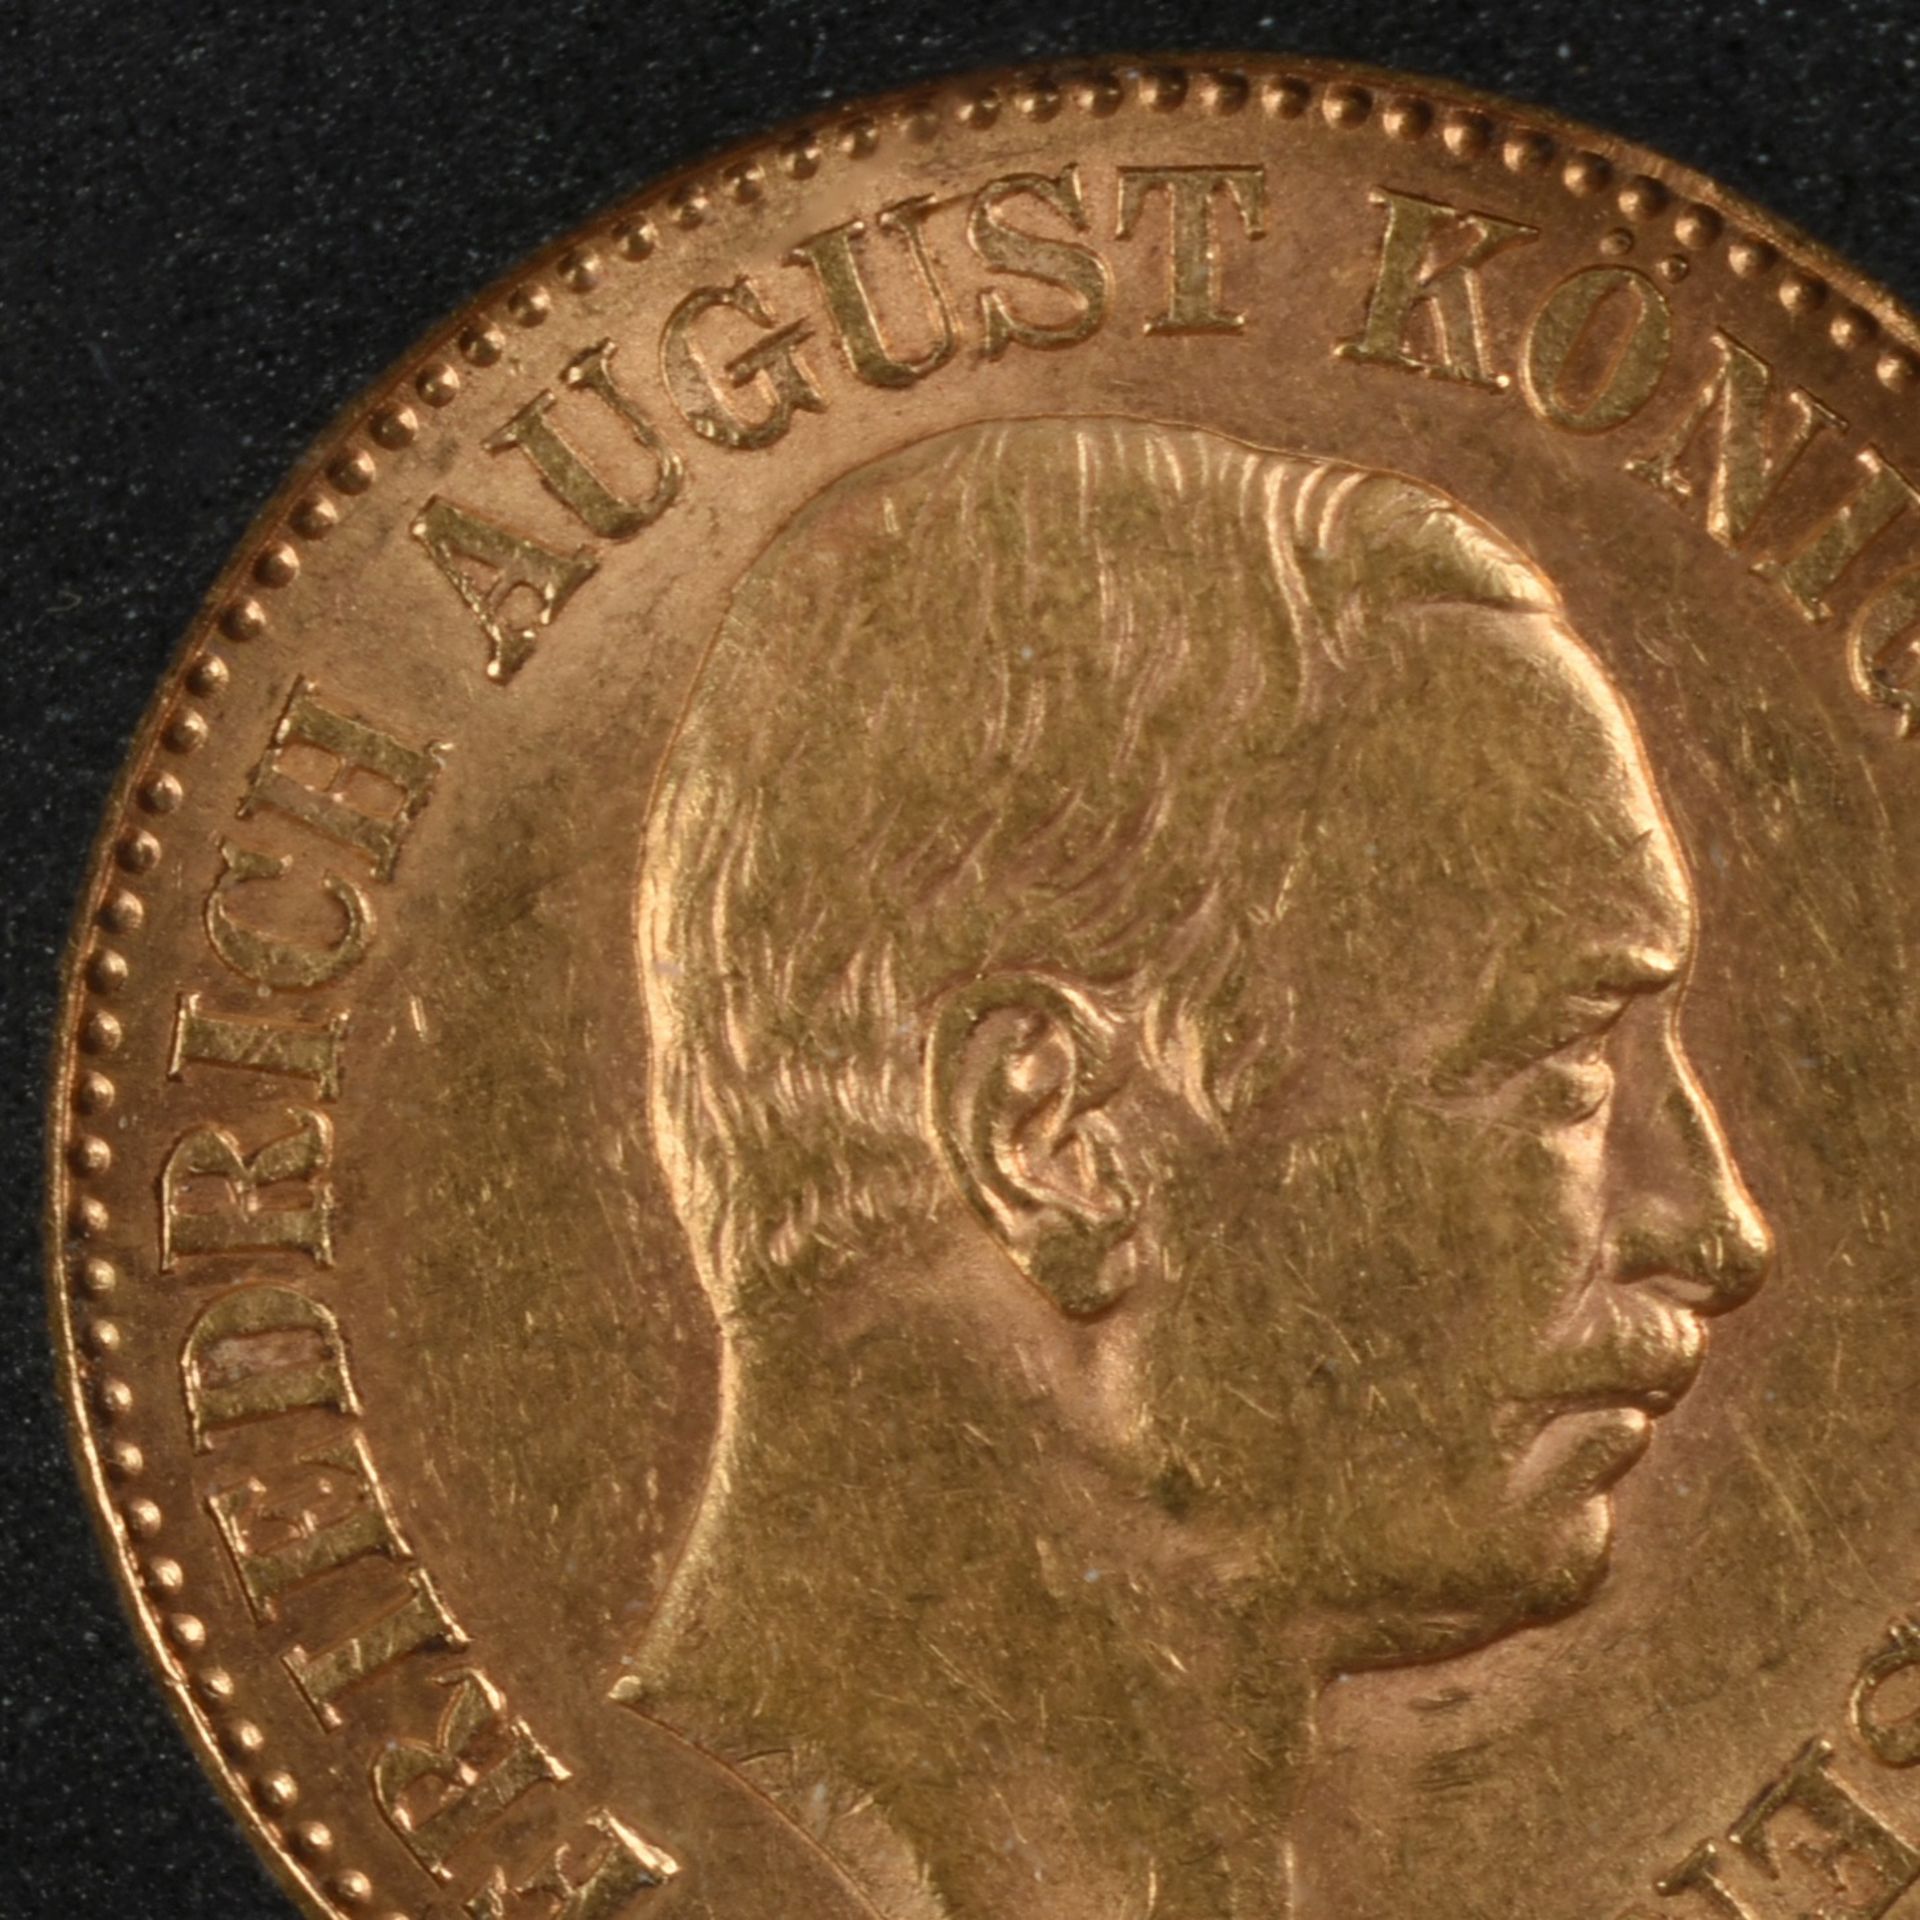 Goldmünze Sachsen 1905 20 Mark in Gold, 900/1000, 7,96 g, D ca. 22,5 mm, av. Friedrich August